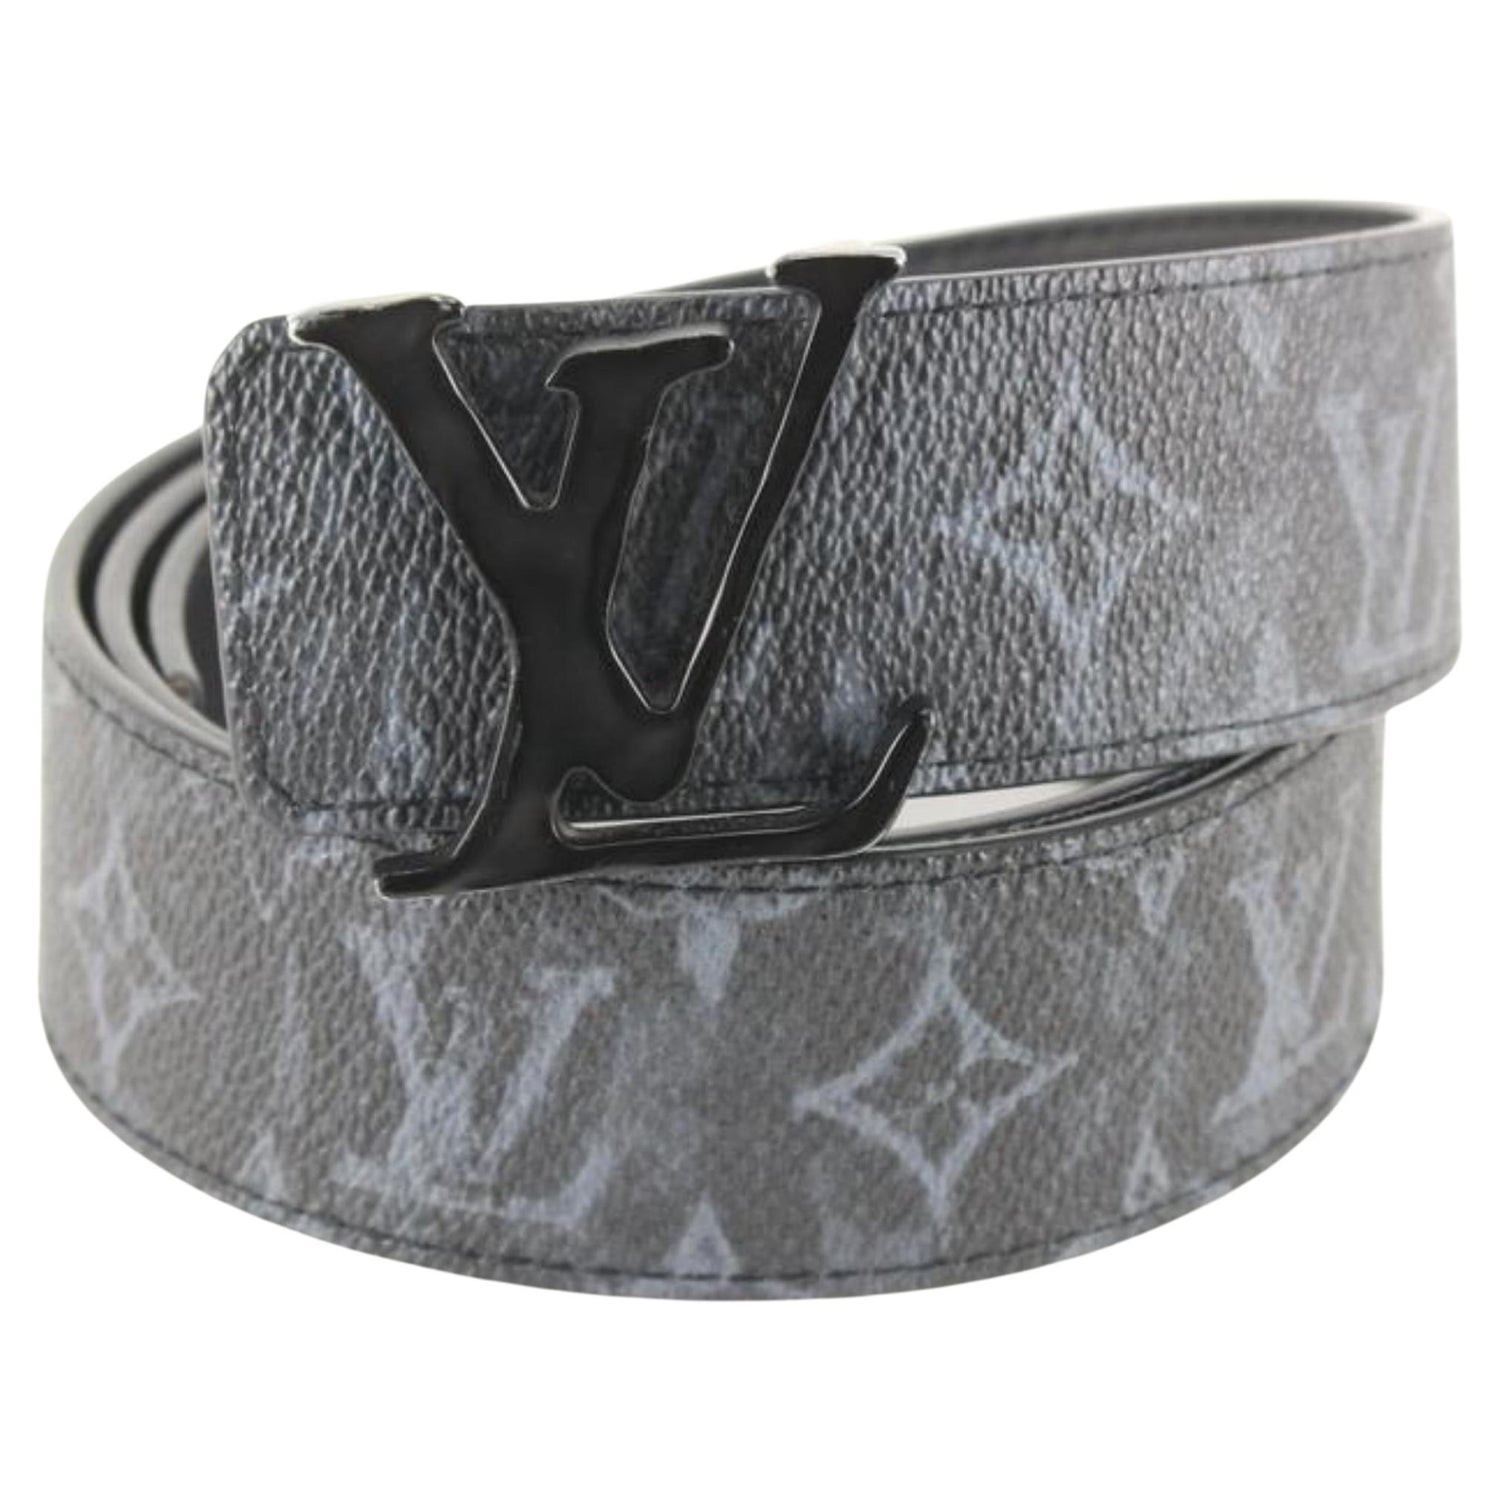 Black Louis Vuitton Belt, Size 42/105, Holes are in